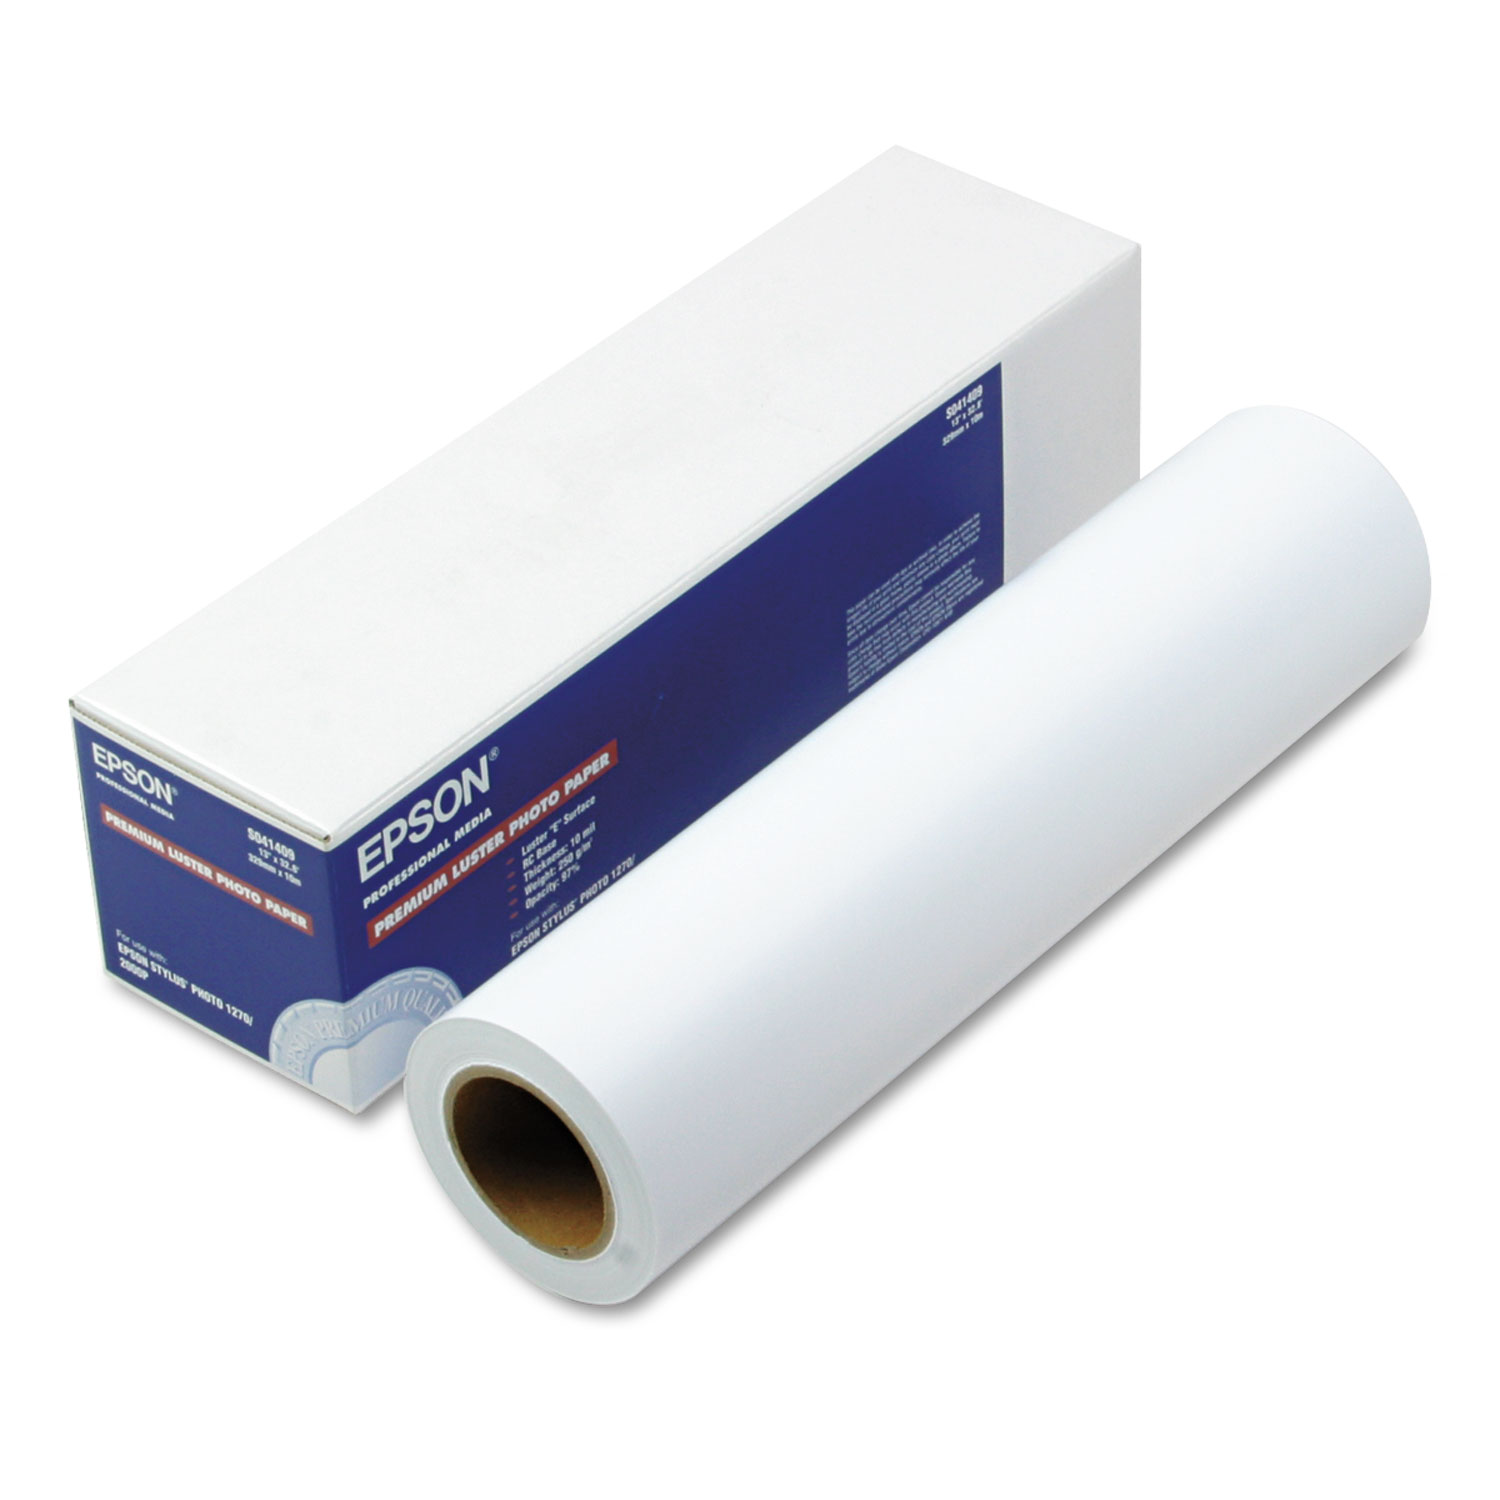  Epson S041409 Premium Luster Photo Paper Roll, 10 mil, 13 x 32.8 ft, Premium Luster White (EPSS041409) 